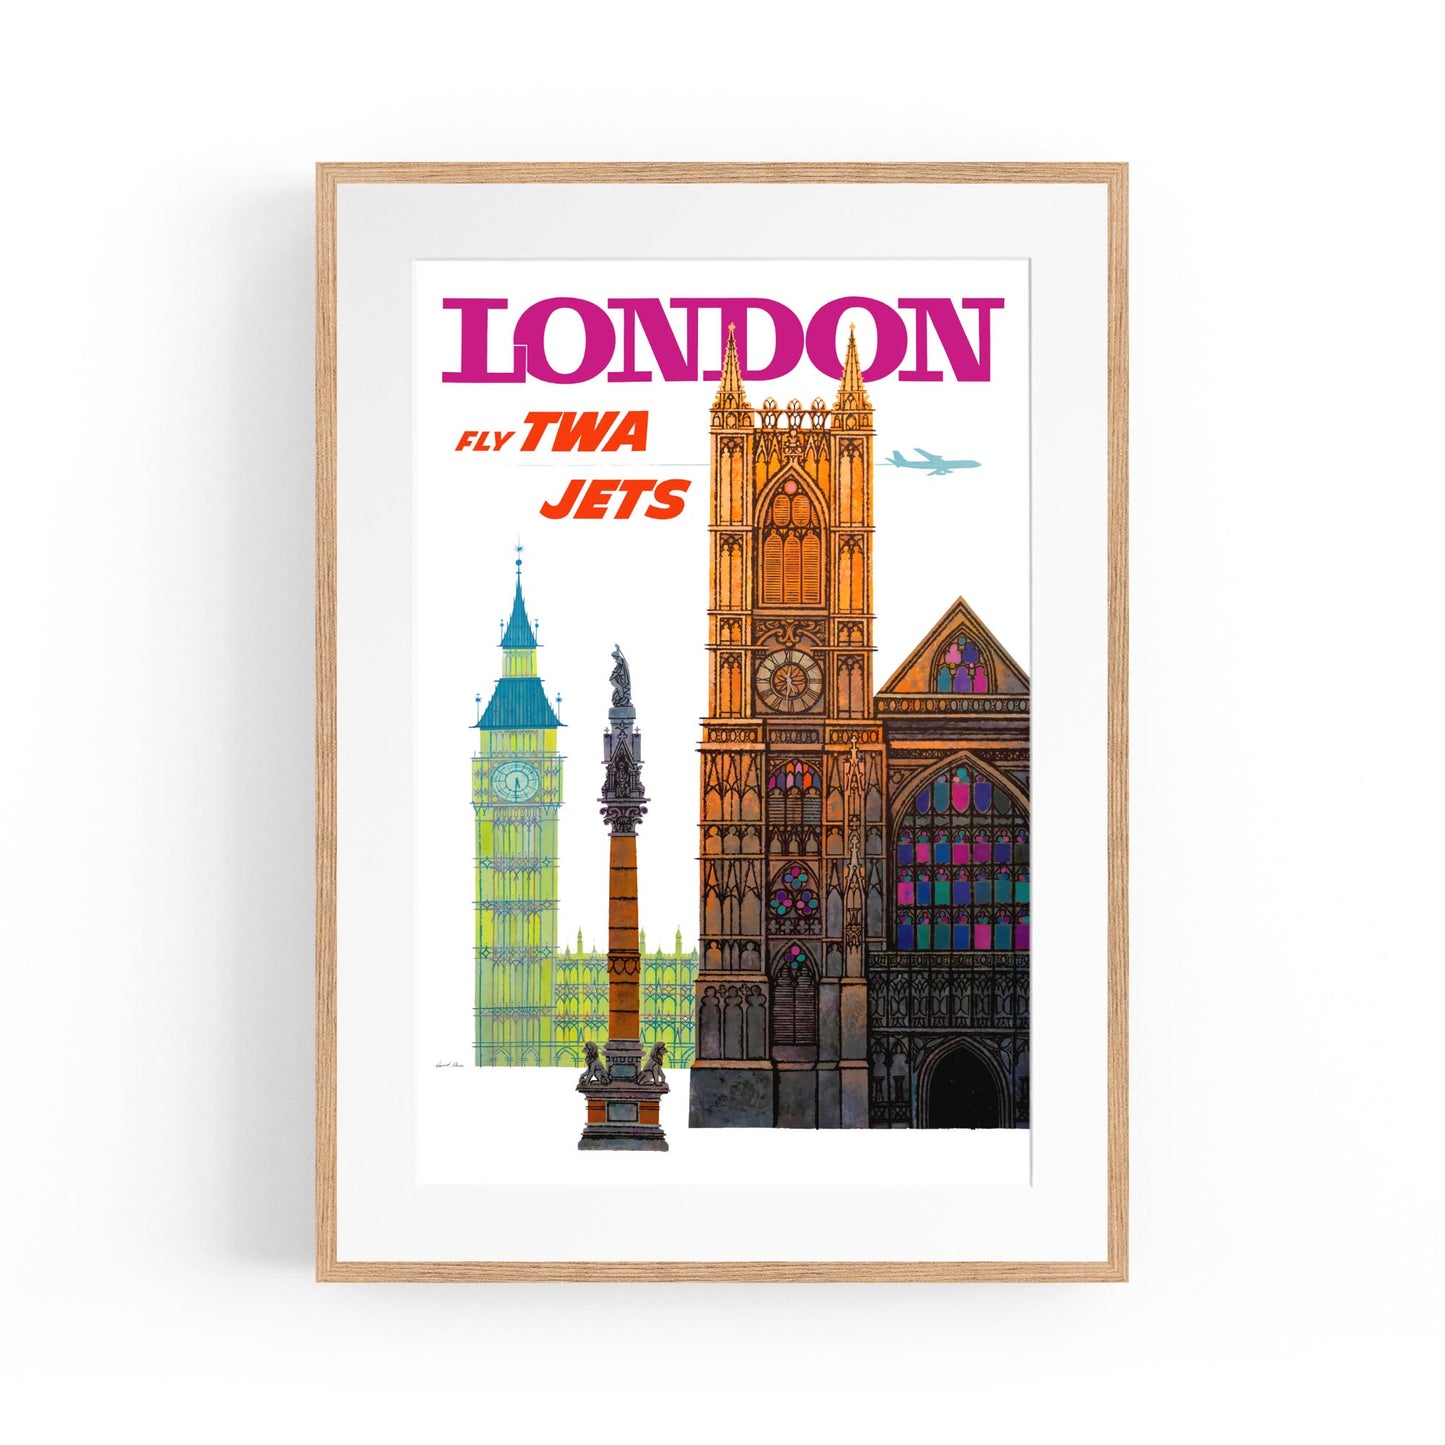 London Landmarks by David Klein - Fly TWA Jets | Framed Vintage Travel Poster